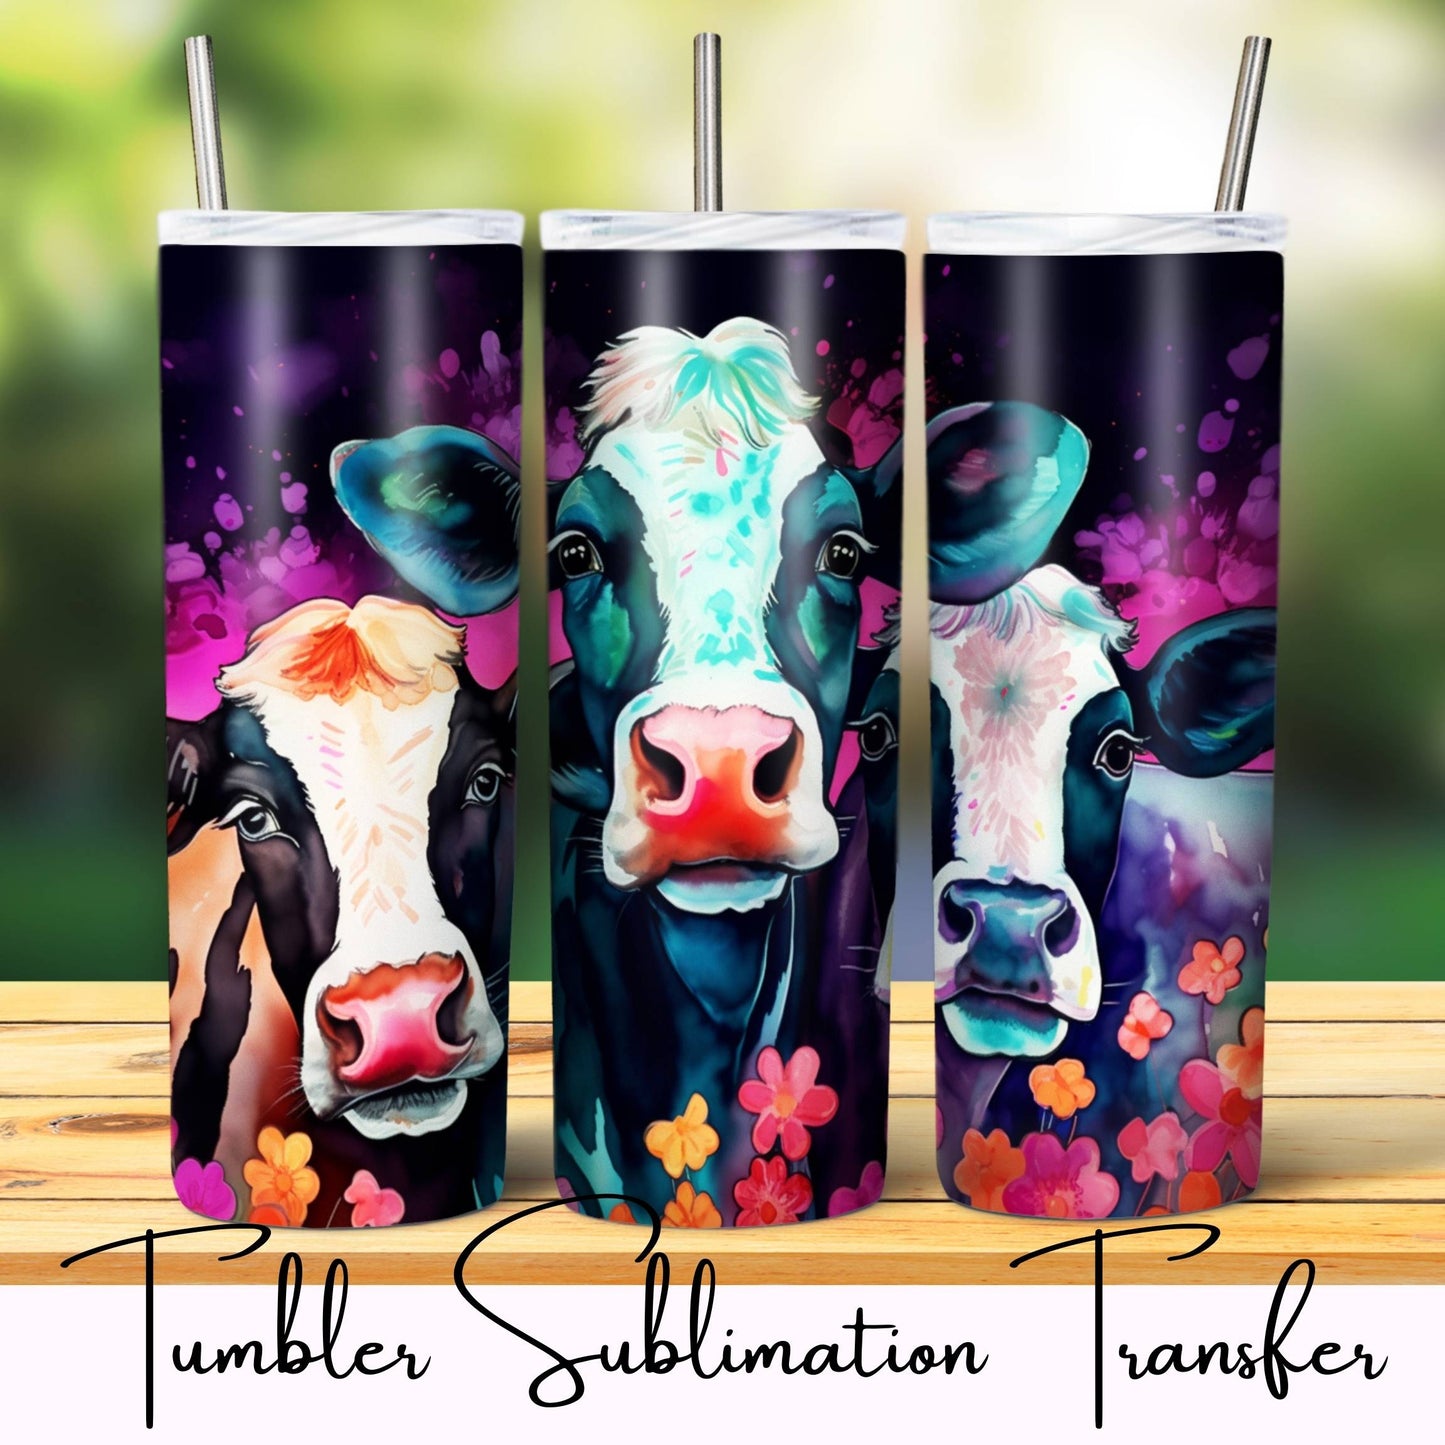 SUB1152  Animal Selfies Cows Tumbler Sublimation Transfer